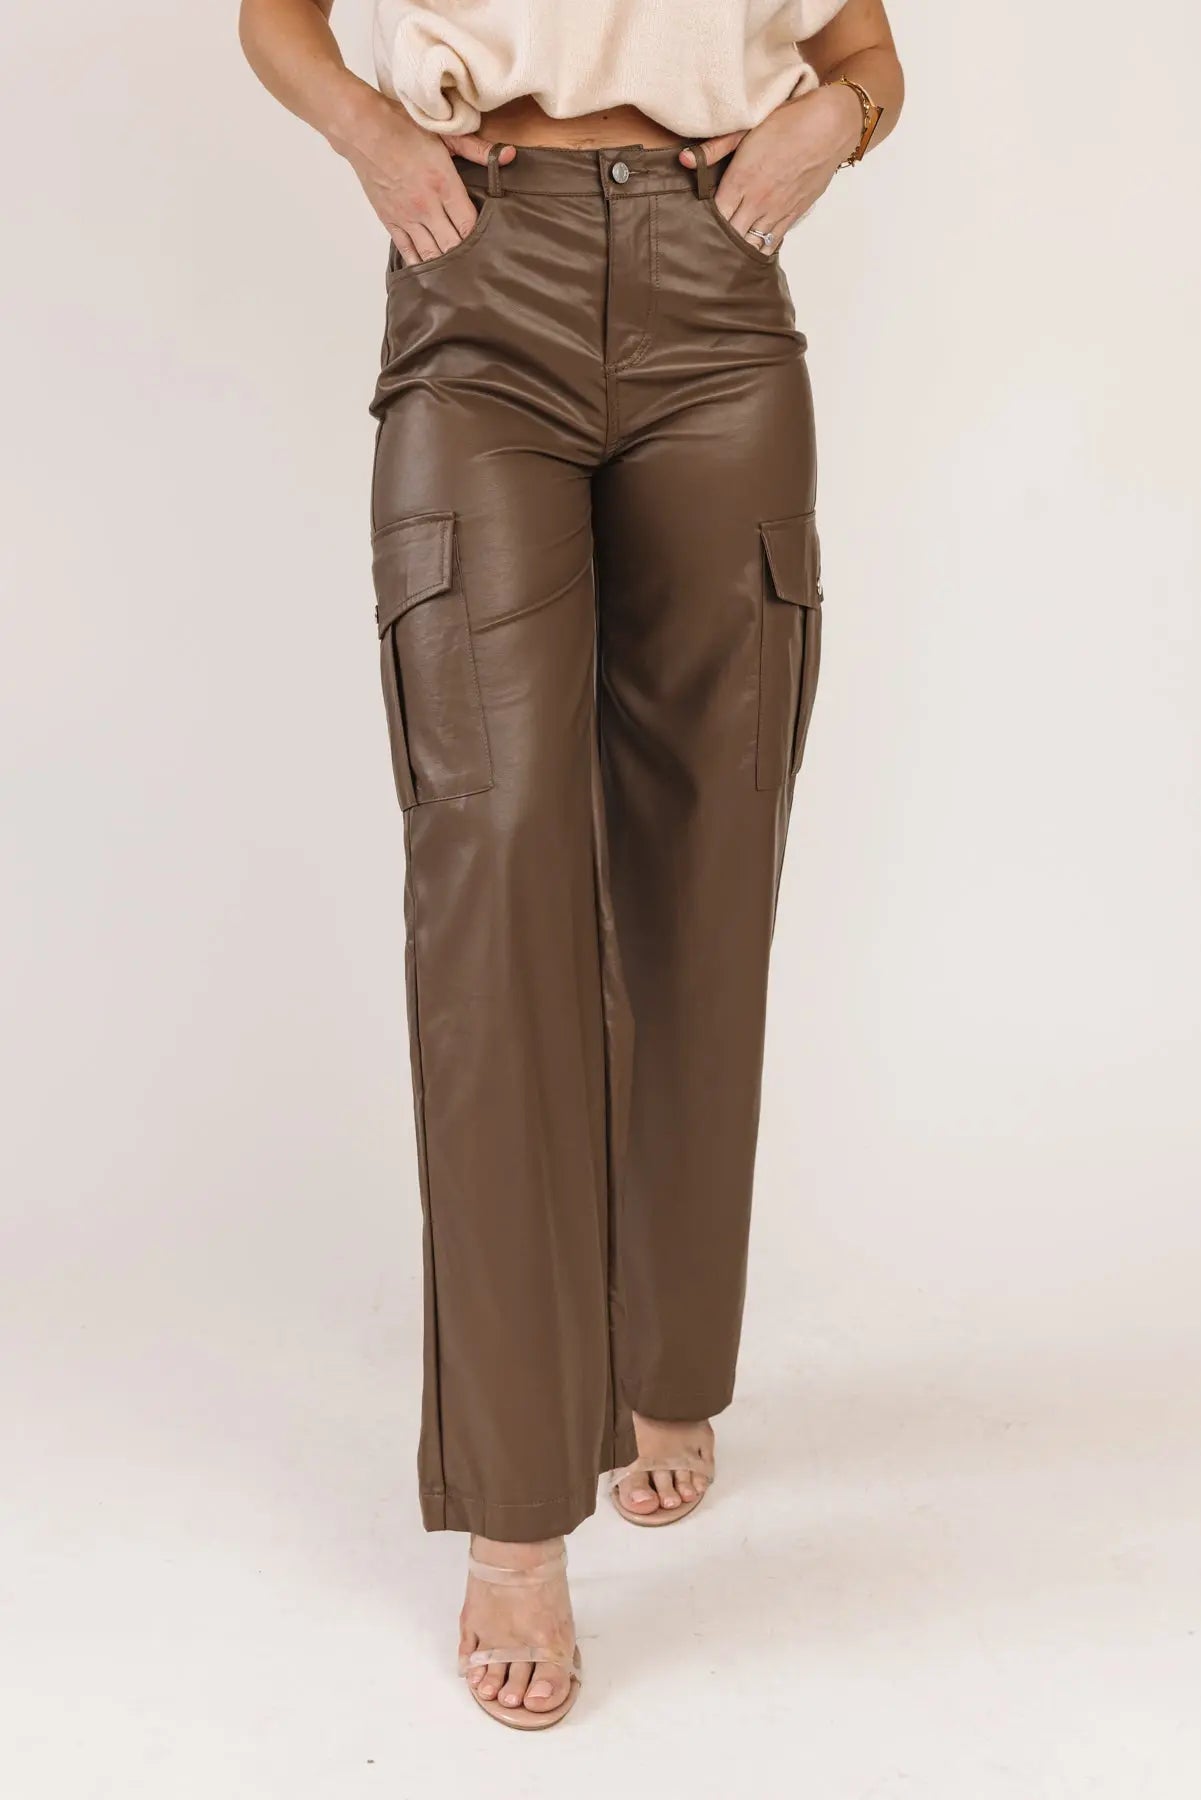 Trendy Girl Brown Faux Leather Pants - JO+CO